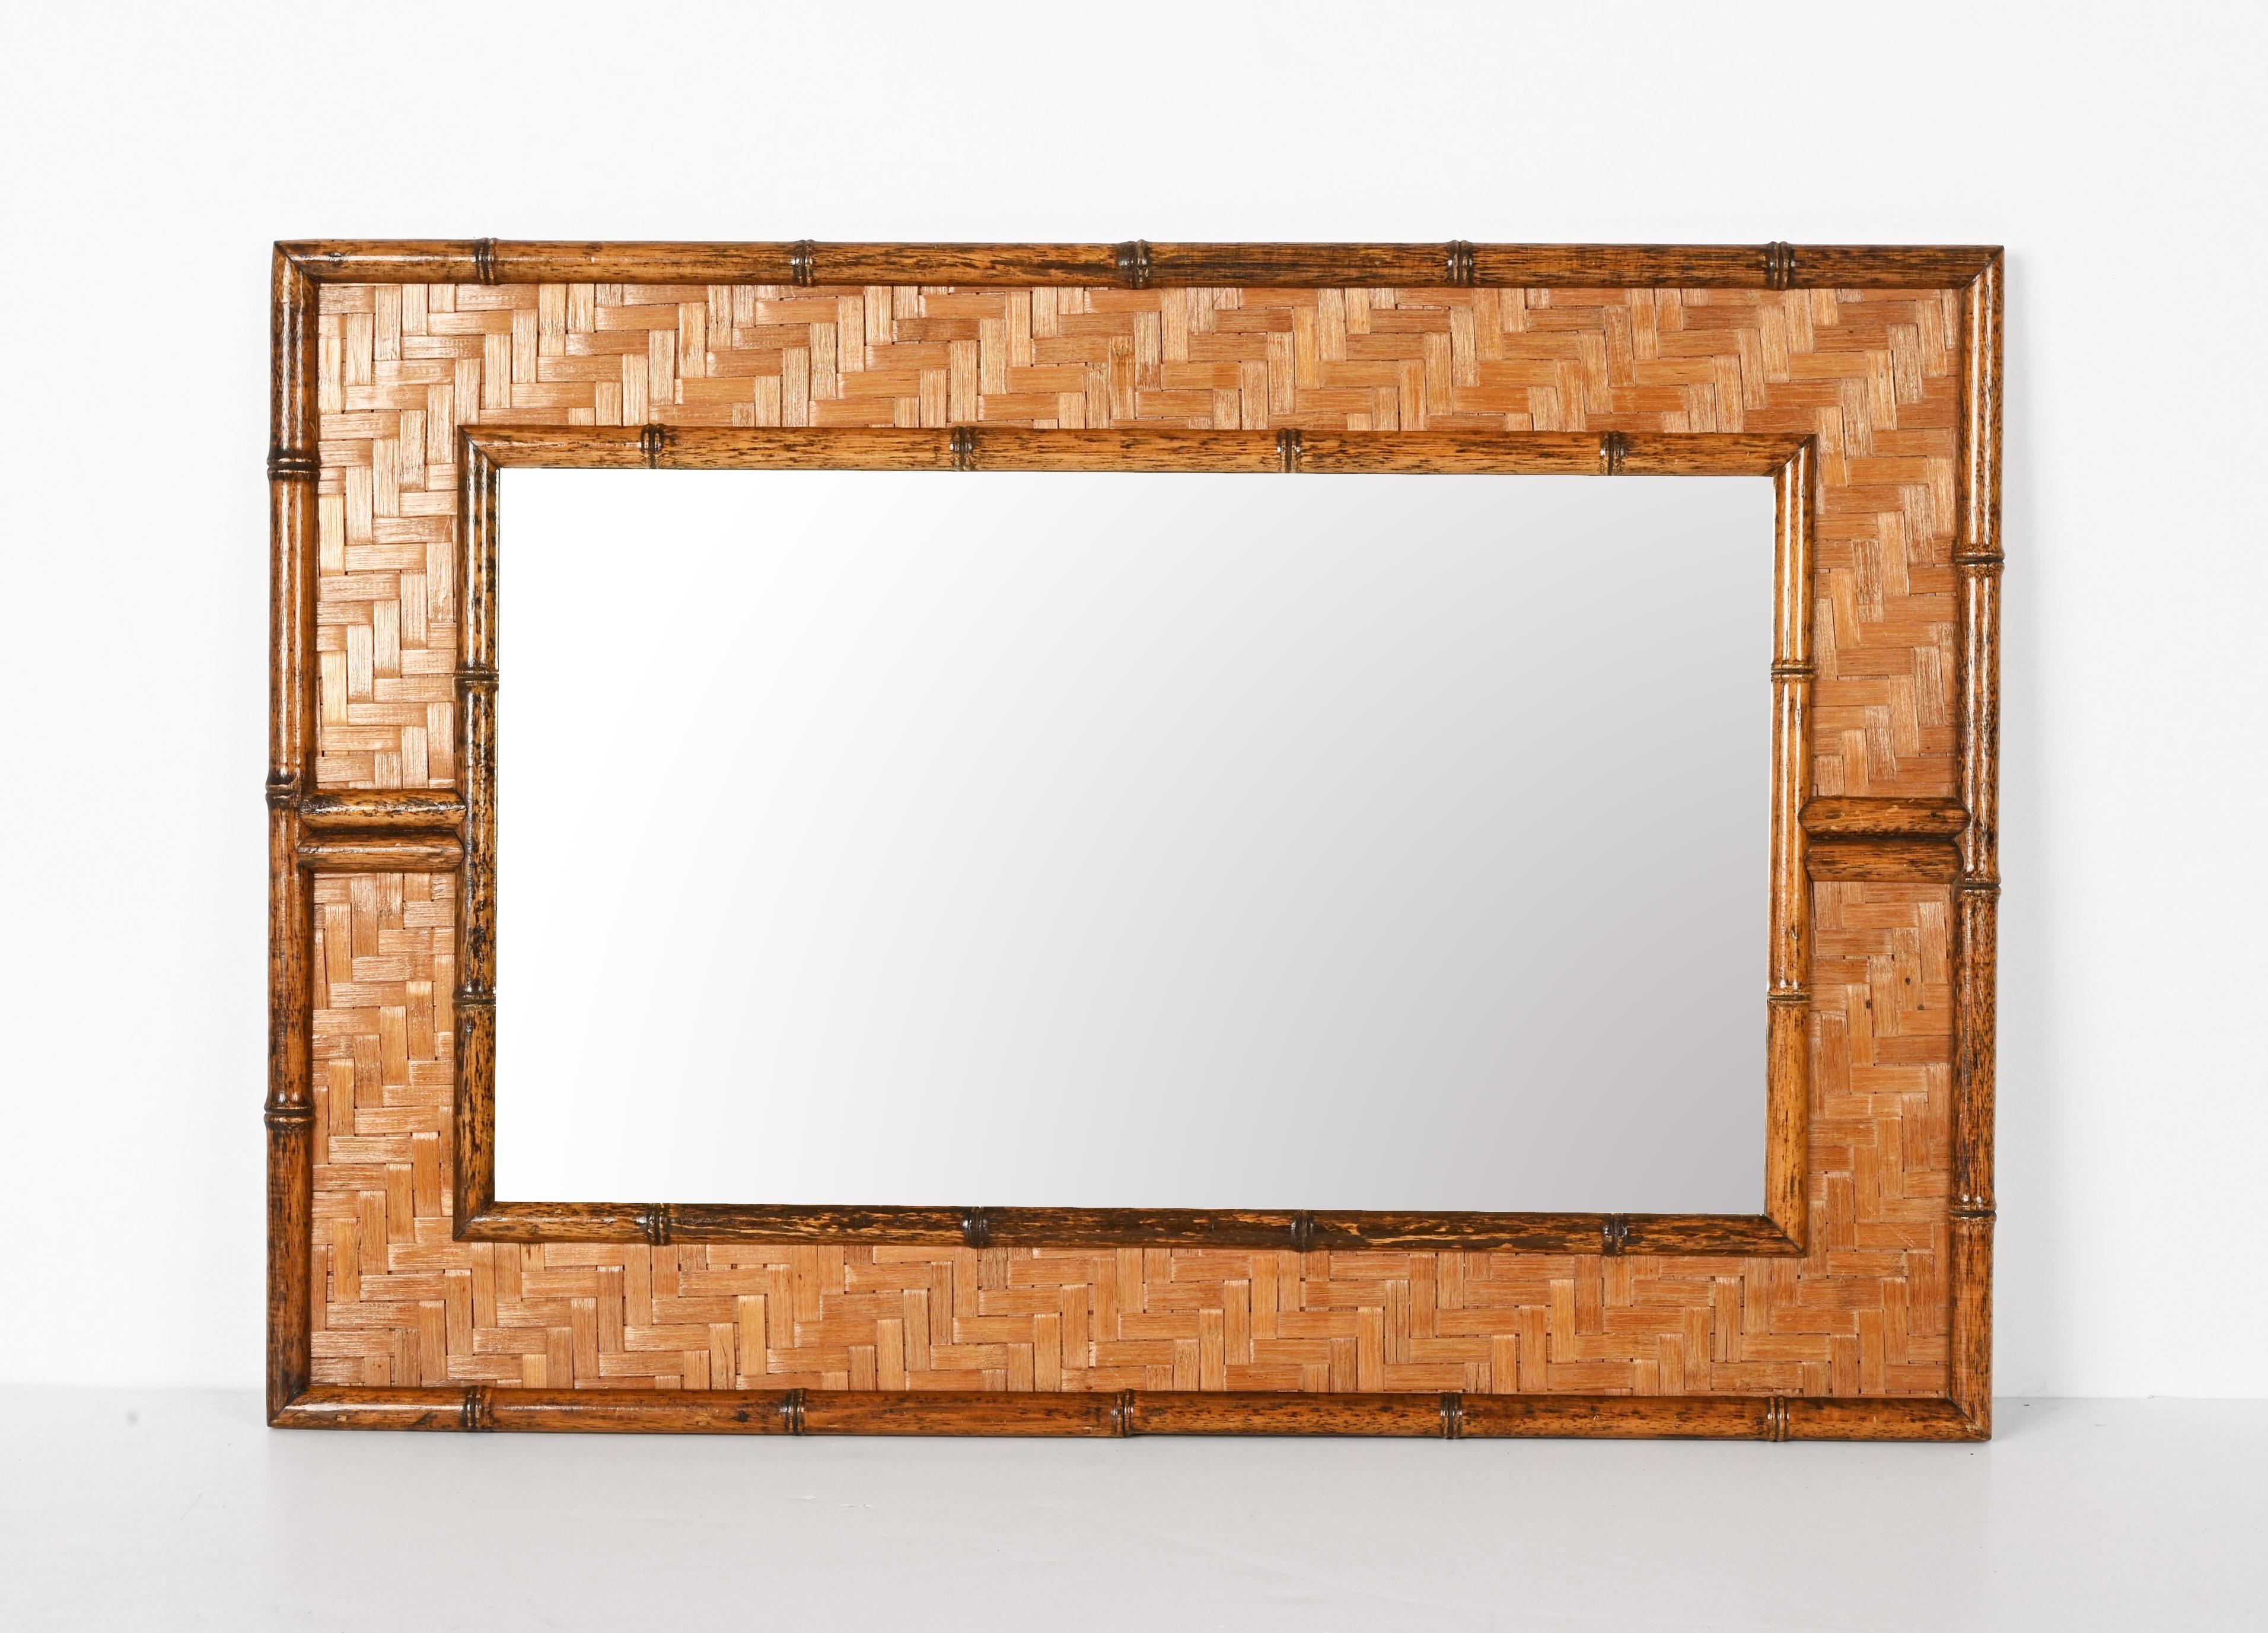 20th Century Midcentury Rectangular Bamboo Cane and Wicker Woven Frame Italian Mirror, 1960s